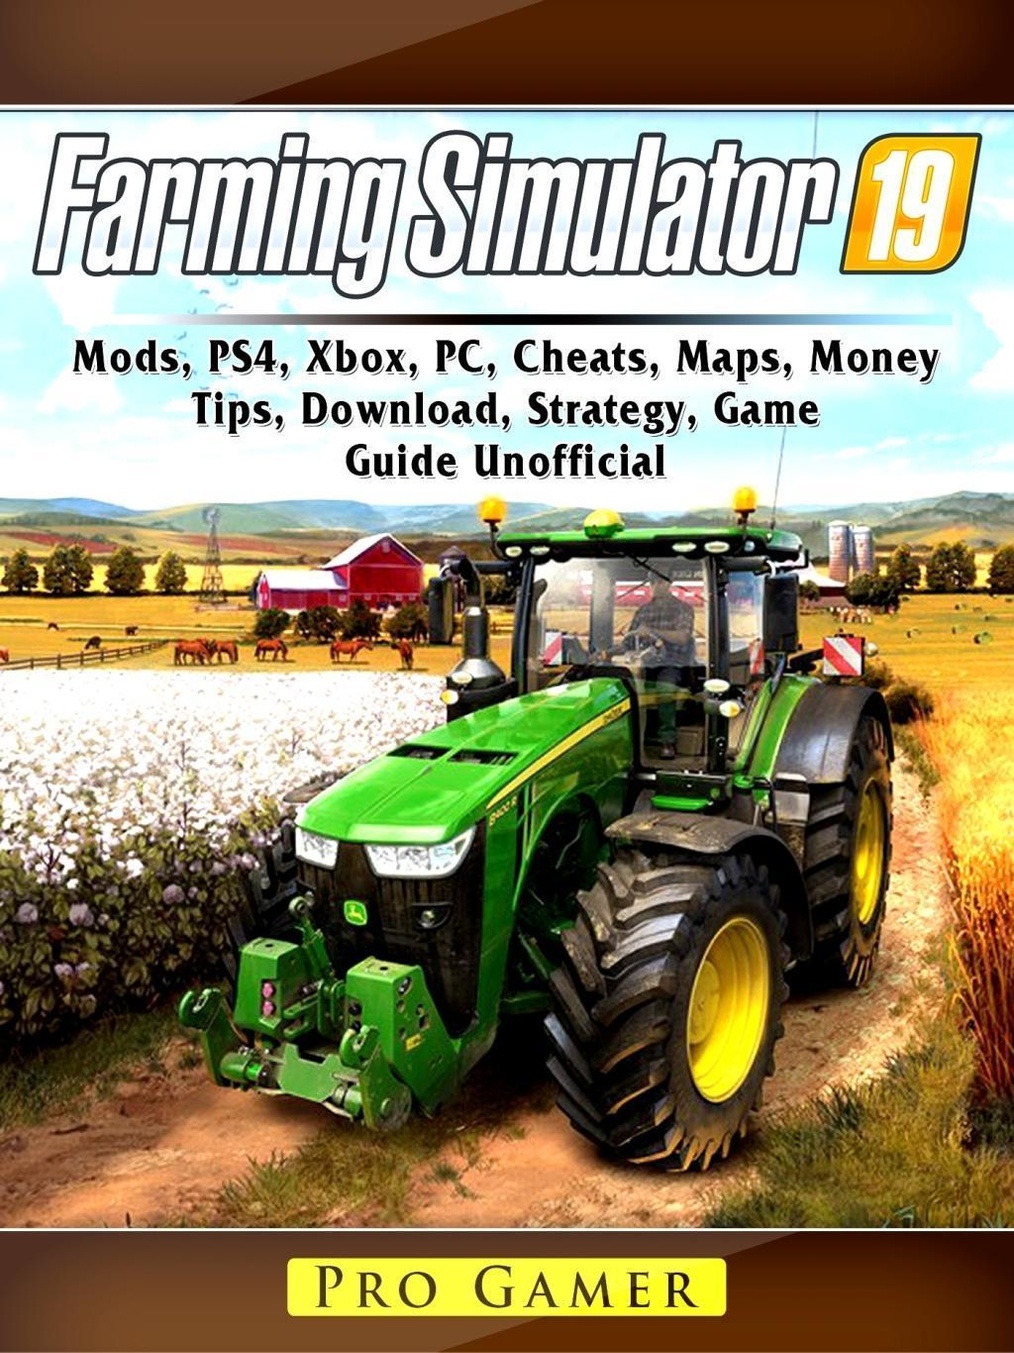 https://i.weltbild.de/p/farming-simulator-19-mods-ps4-xbox-pc-cheats-maps-275988421.jpg?v=1&wp=_max